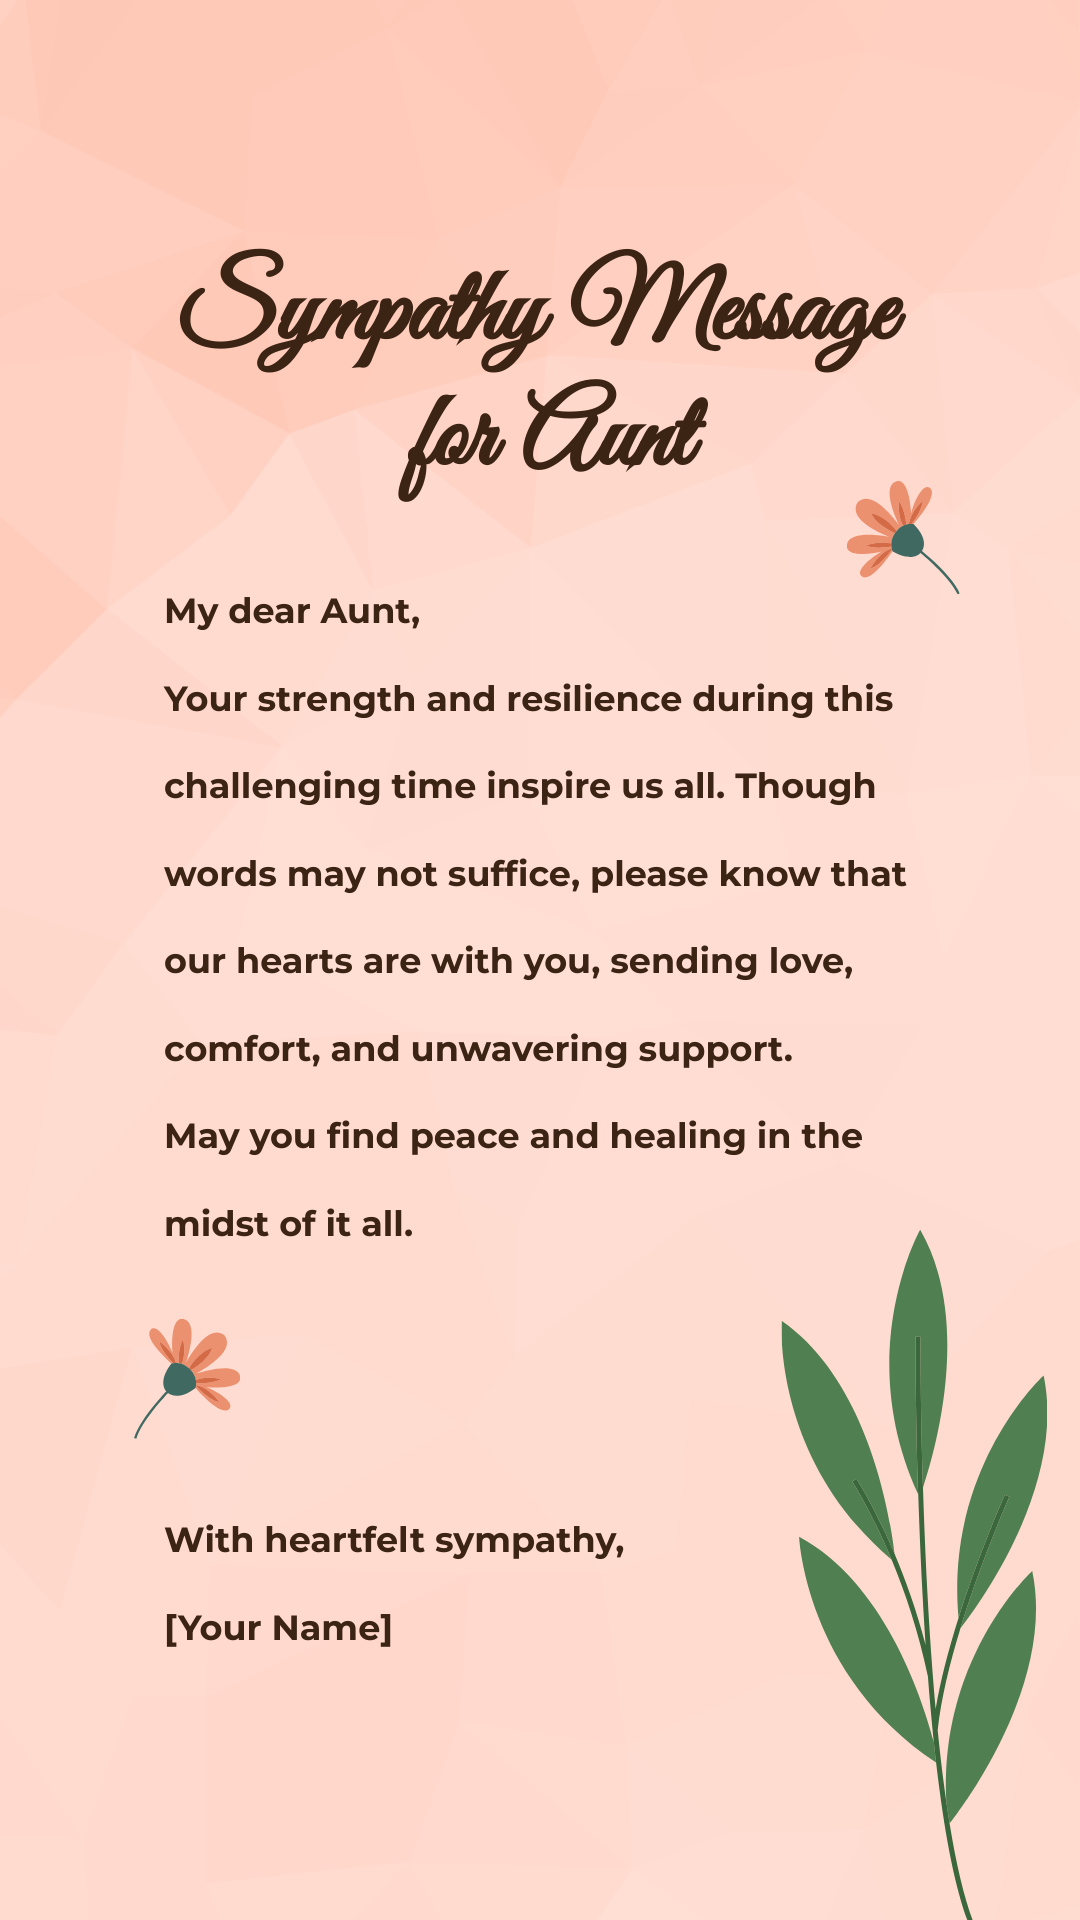 Sympathy Message for Aunt